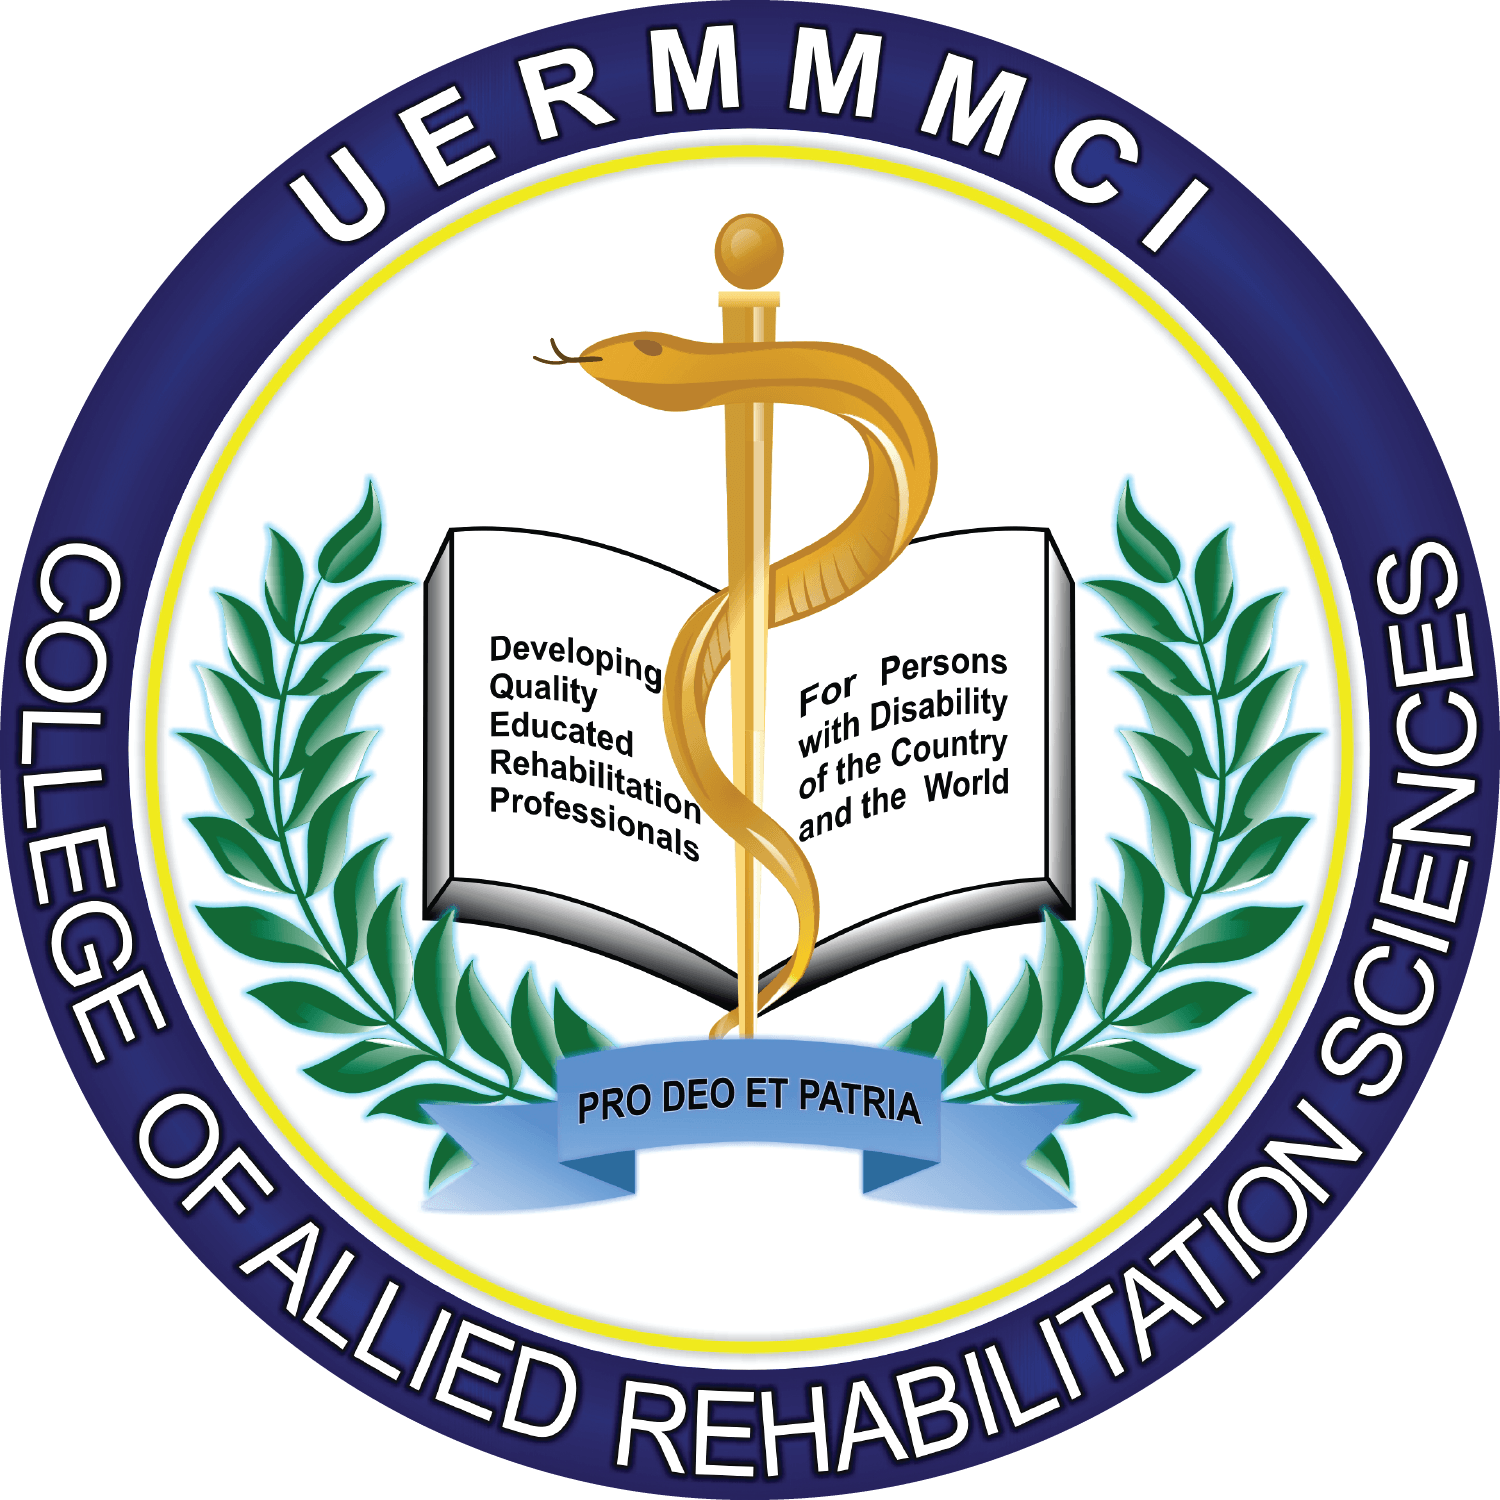 Gold White and Blue College Logo - UERMMMC